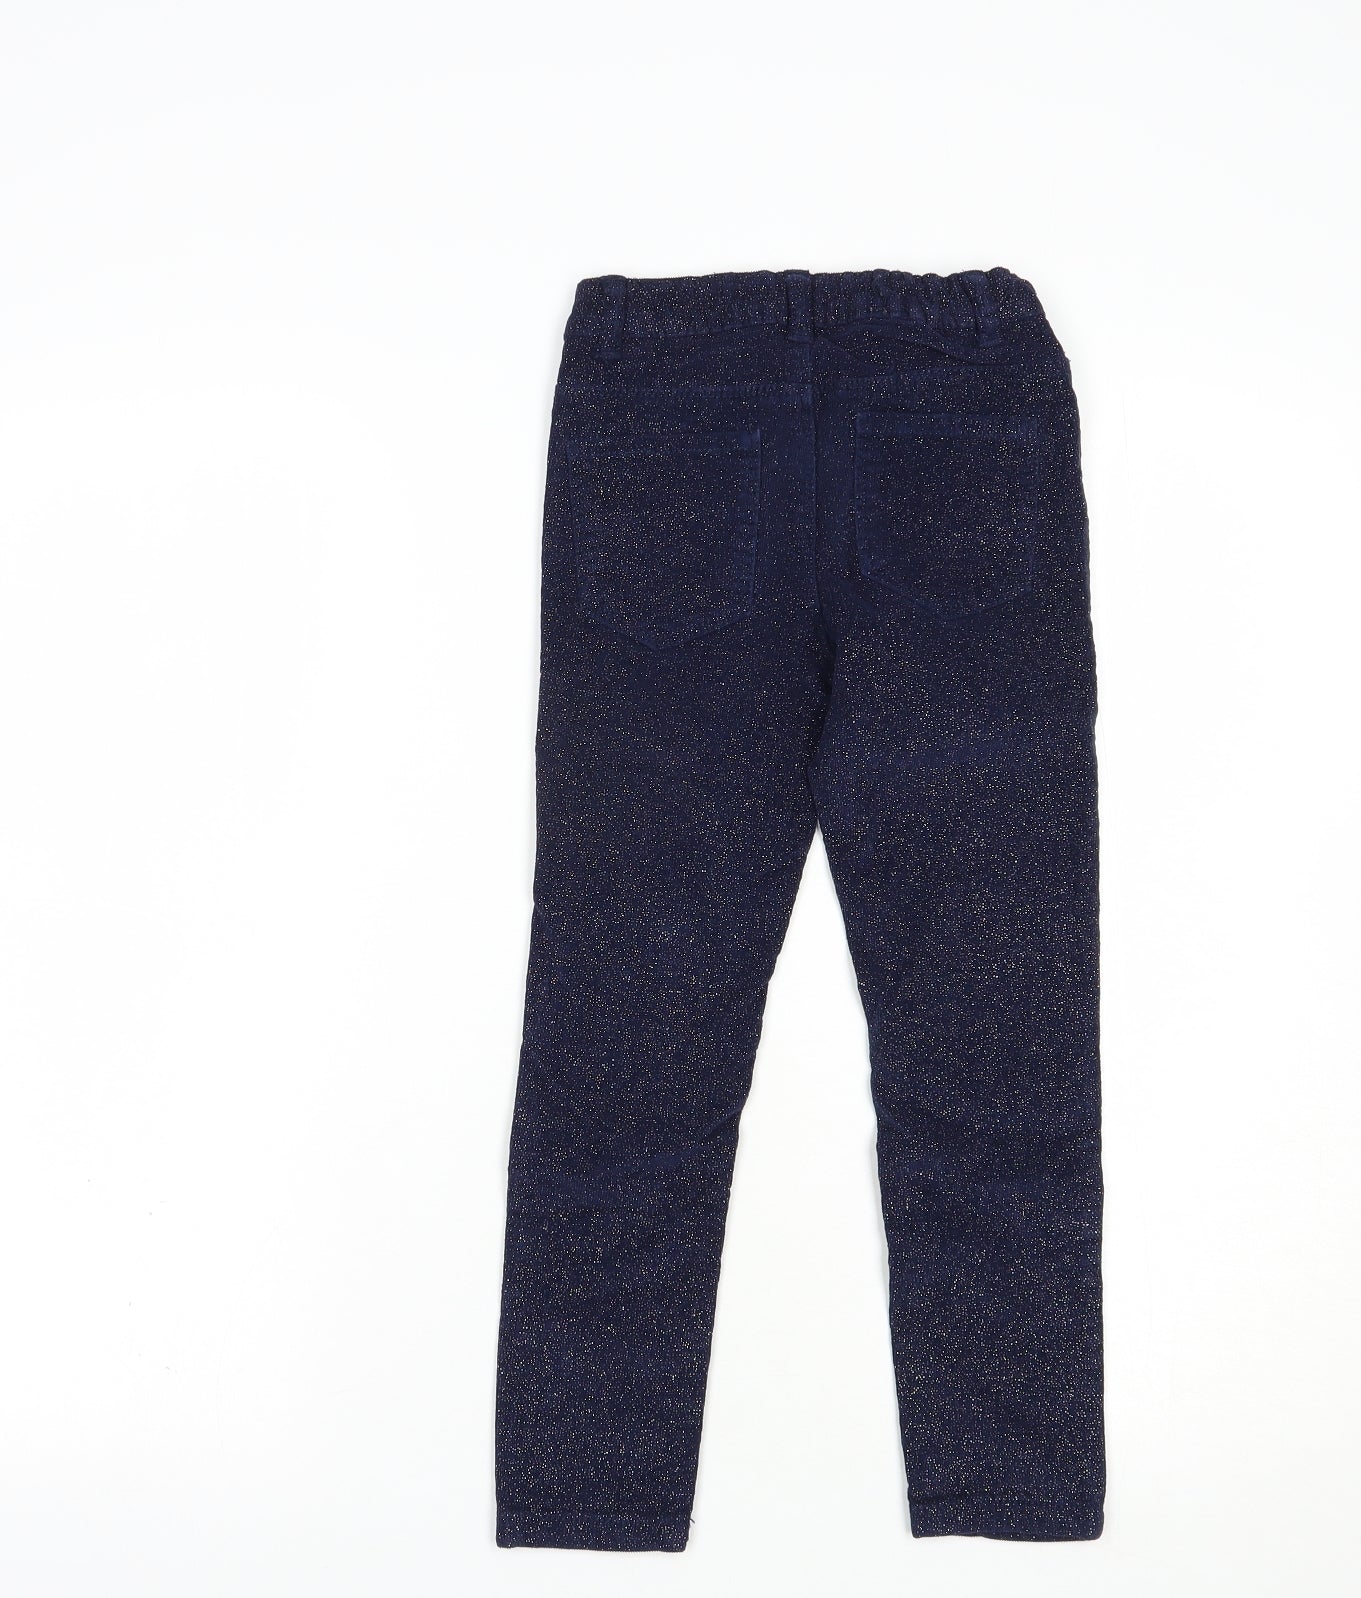 Denim Co. Girls Blue  Cotton Skinny Jeans Size 6-7 Years  Regular Button